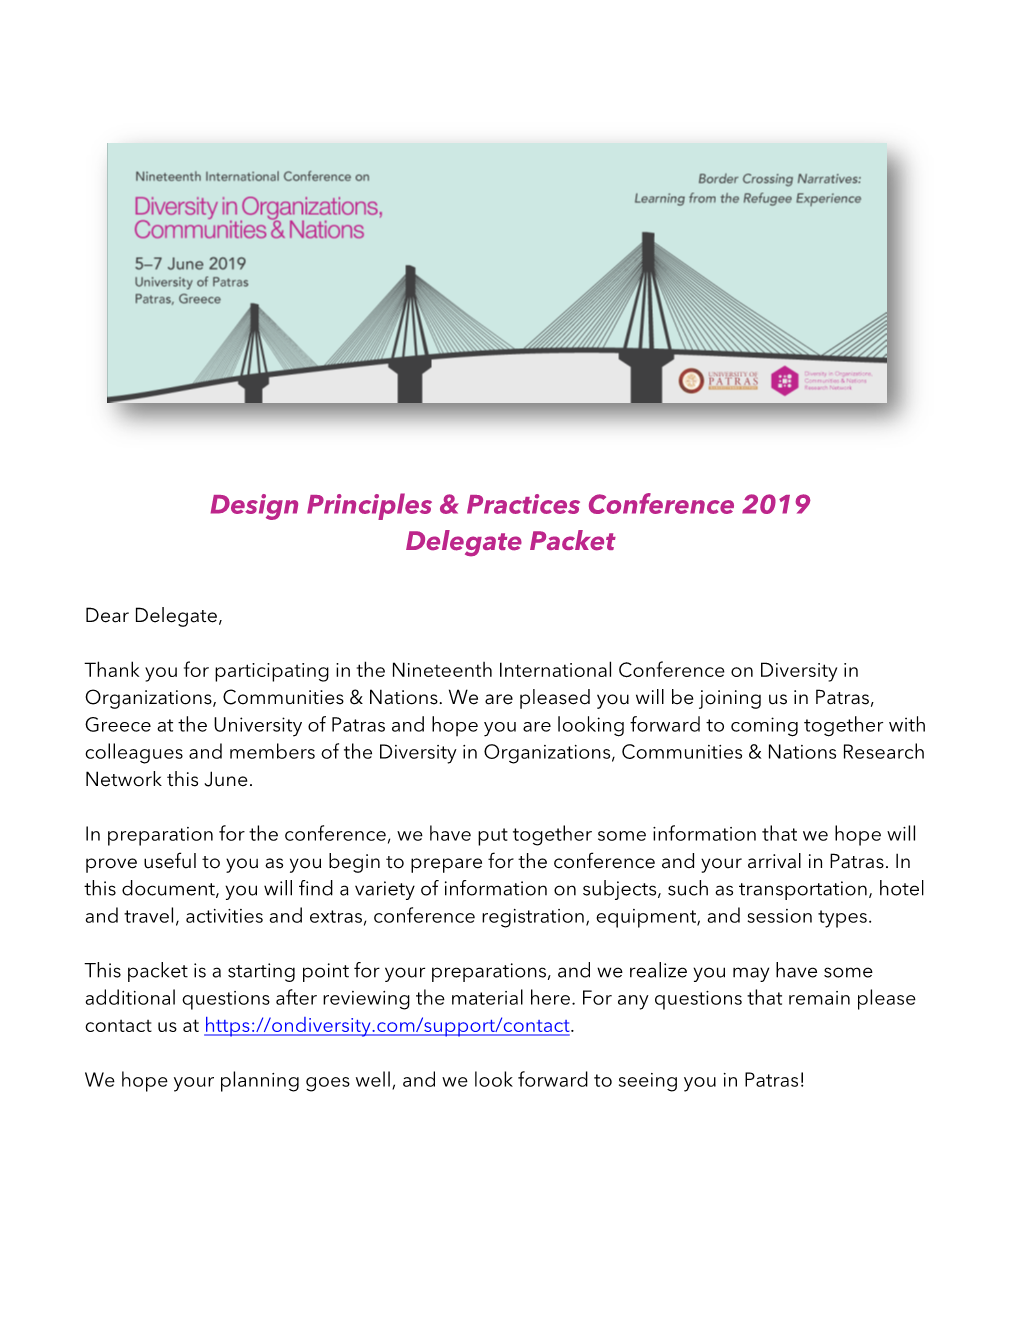 Design Principles & Practices Conference 2019 Delegate Packet